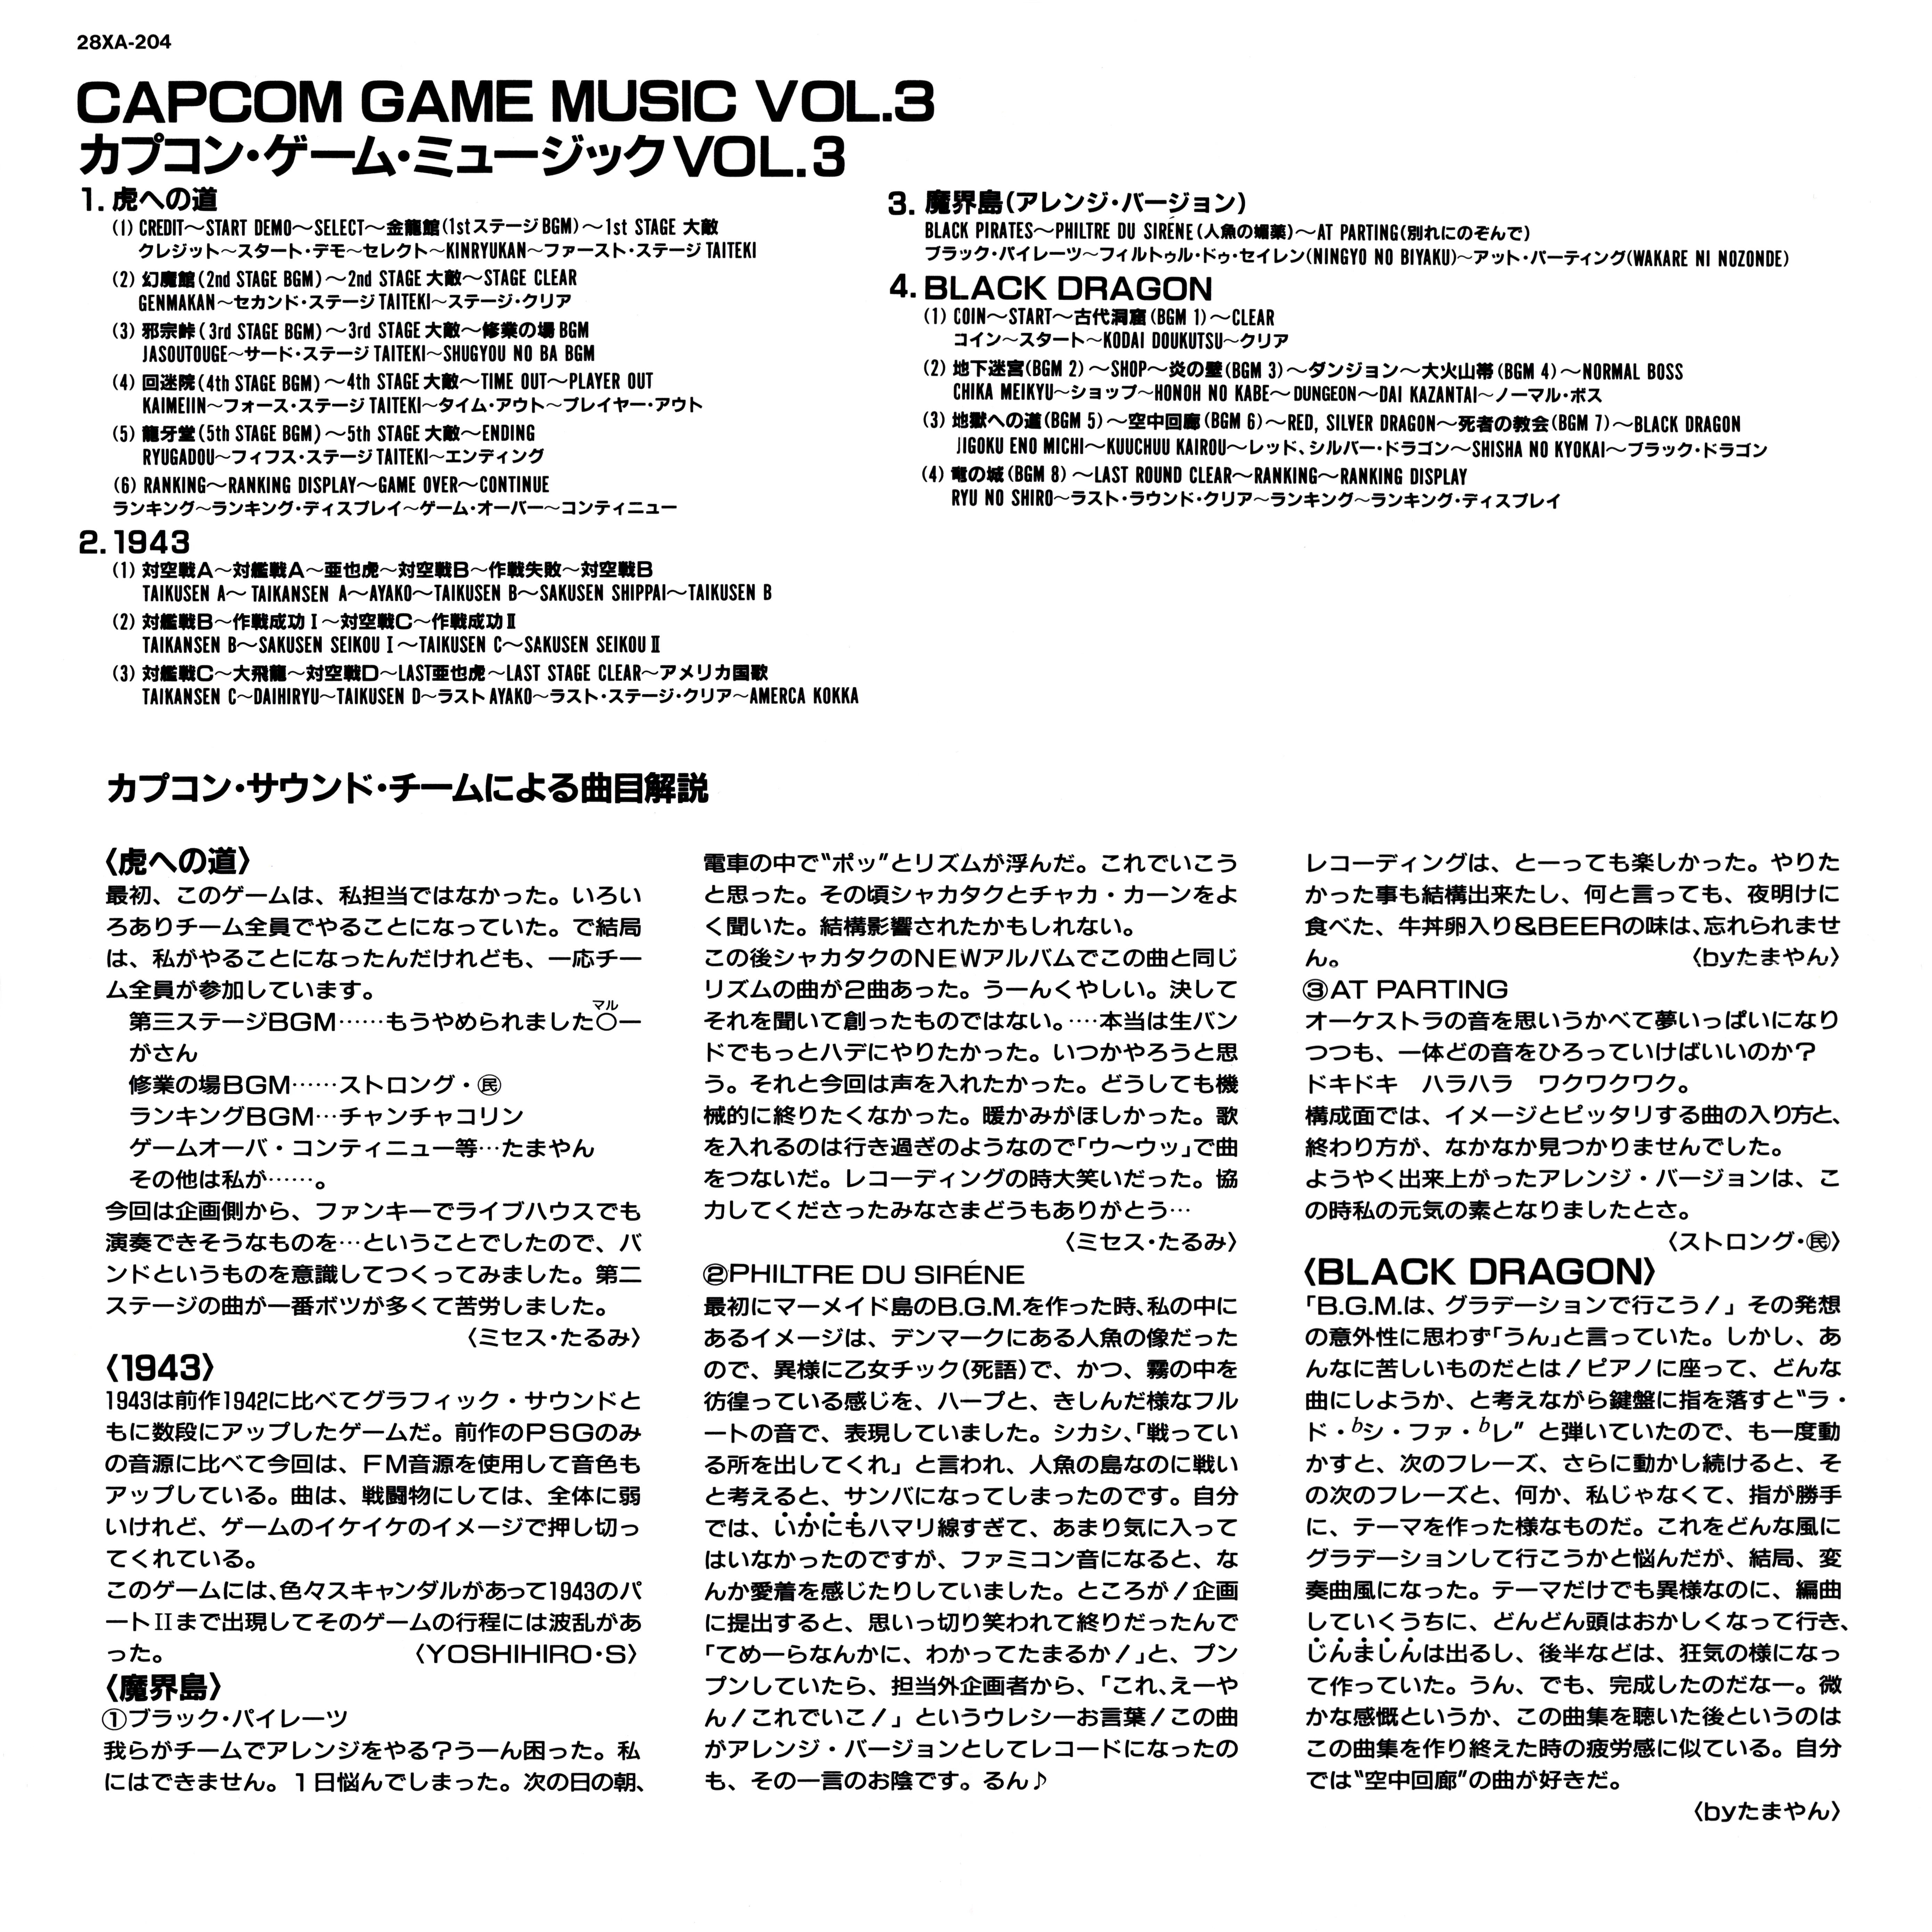 Capcom Game Music VOL.3 (1988) MP3 - Download Capcom Game Music 